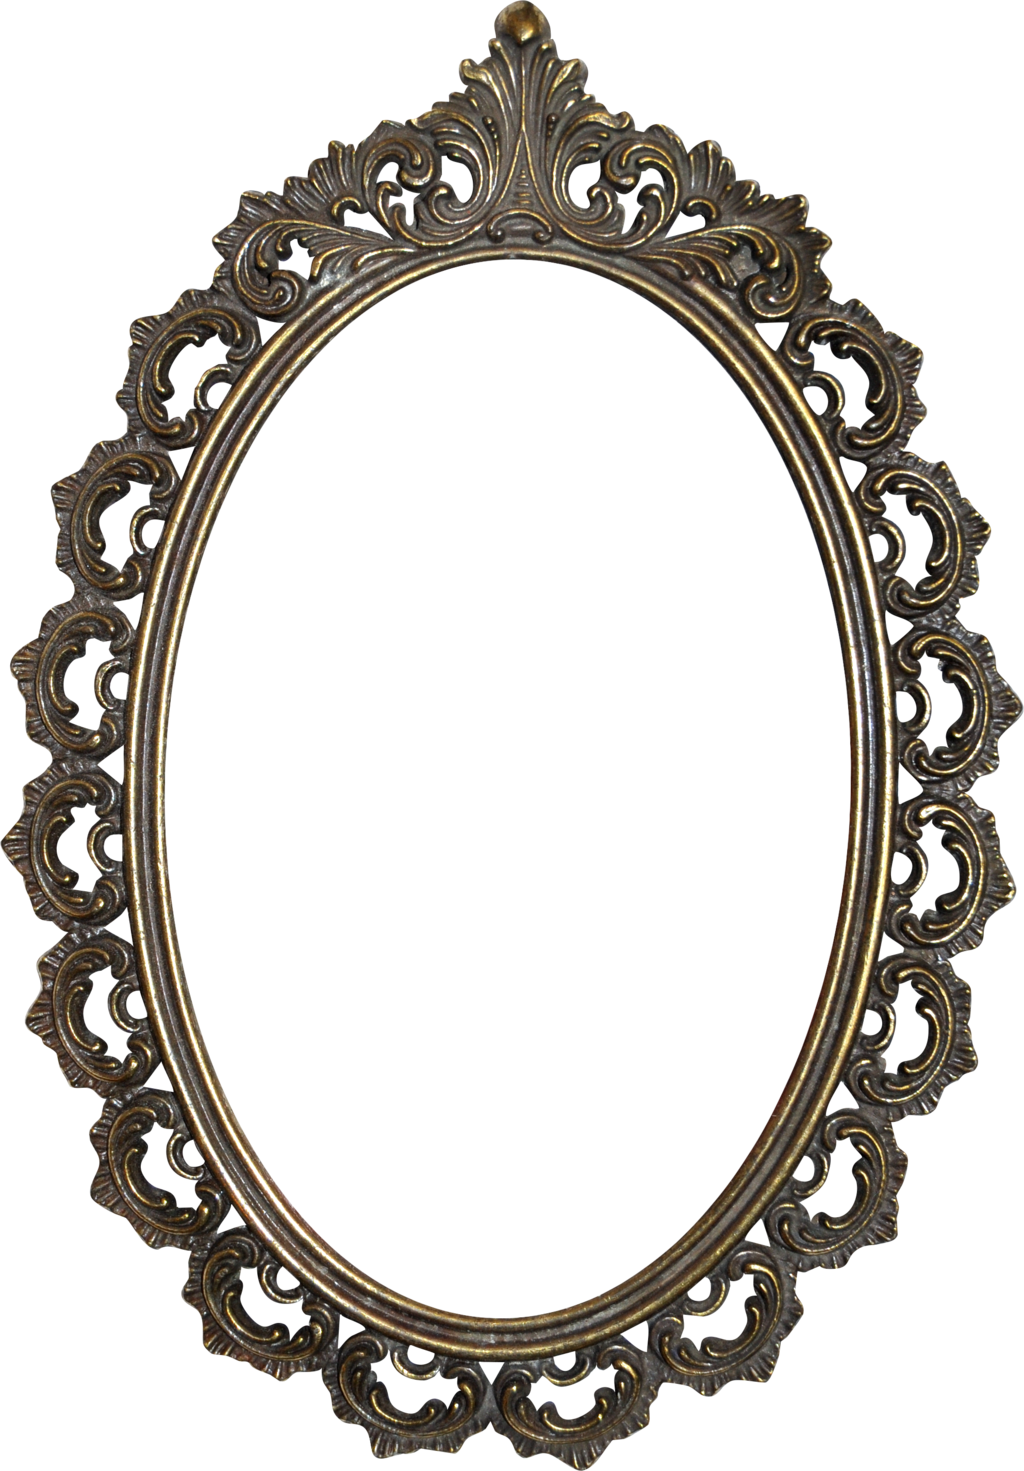 Golden Mirror Frame PNG Image with Transparent Background